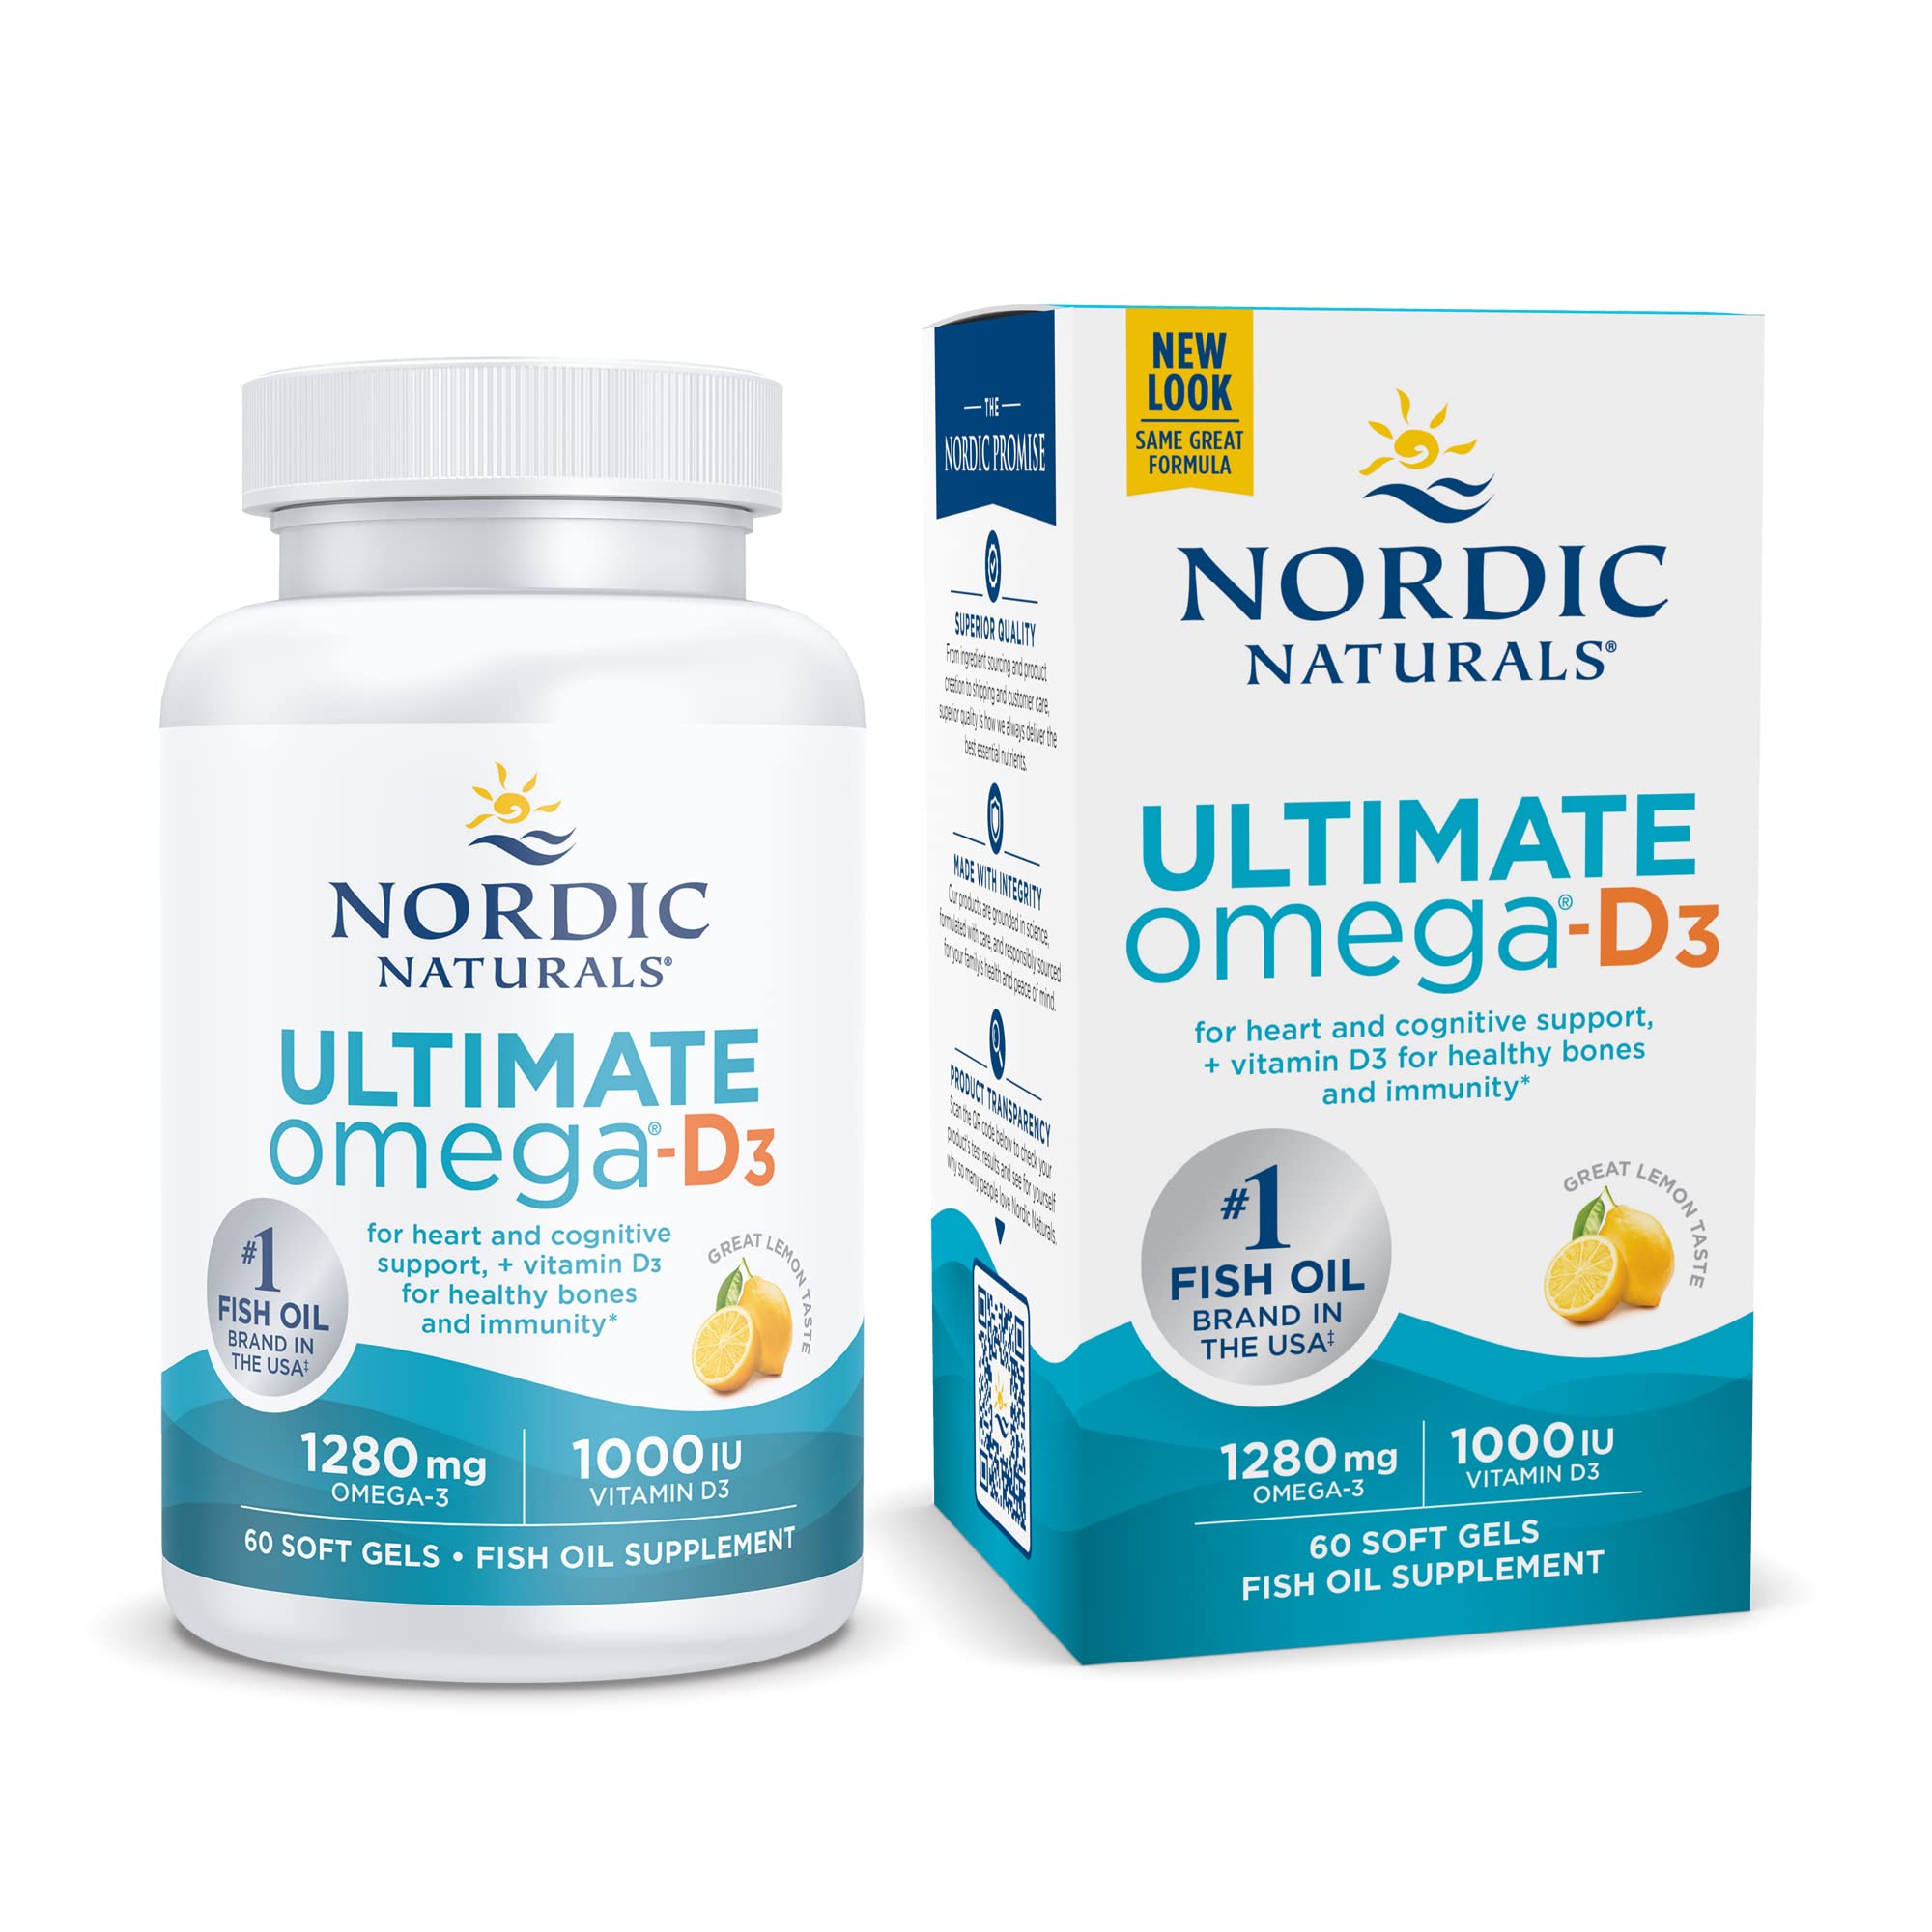 Nordic Naturals Ultimate Omega-D3, Lemon Flavor - 60 Soft Gels - 1280 mg Omega-3 + 1000 IU Vitamin D3 - Omega-3 Fish Oil - EPA & DHA - Promotes Brain, Heart, Joint, & Immune Health - 30 Servings